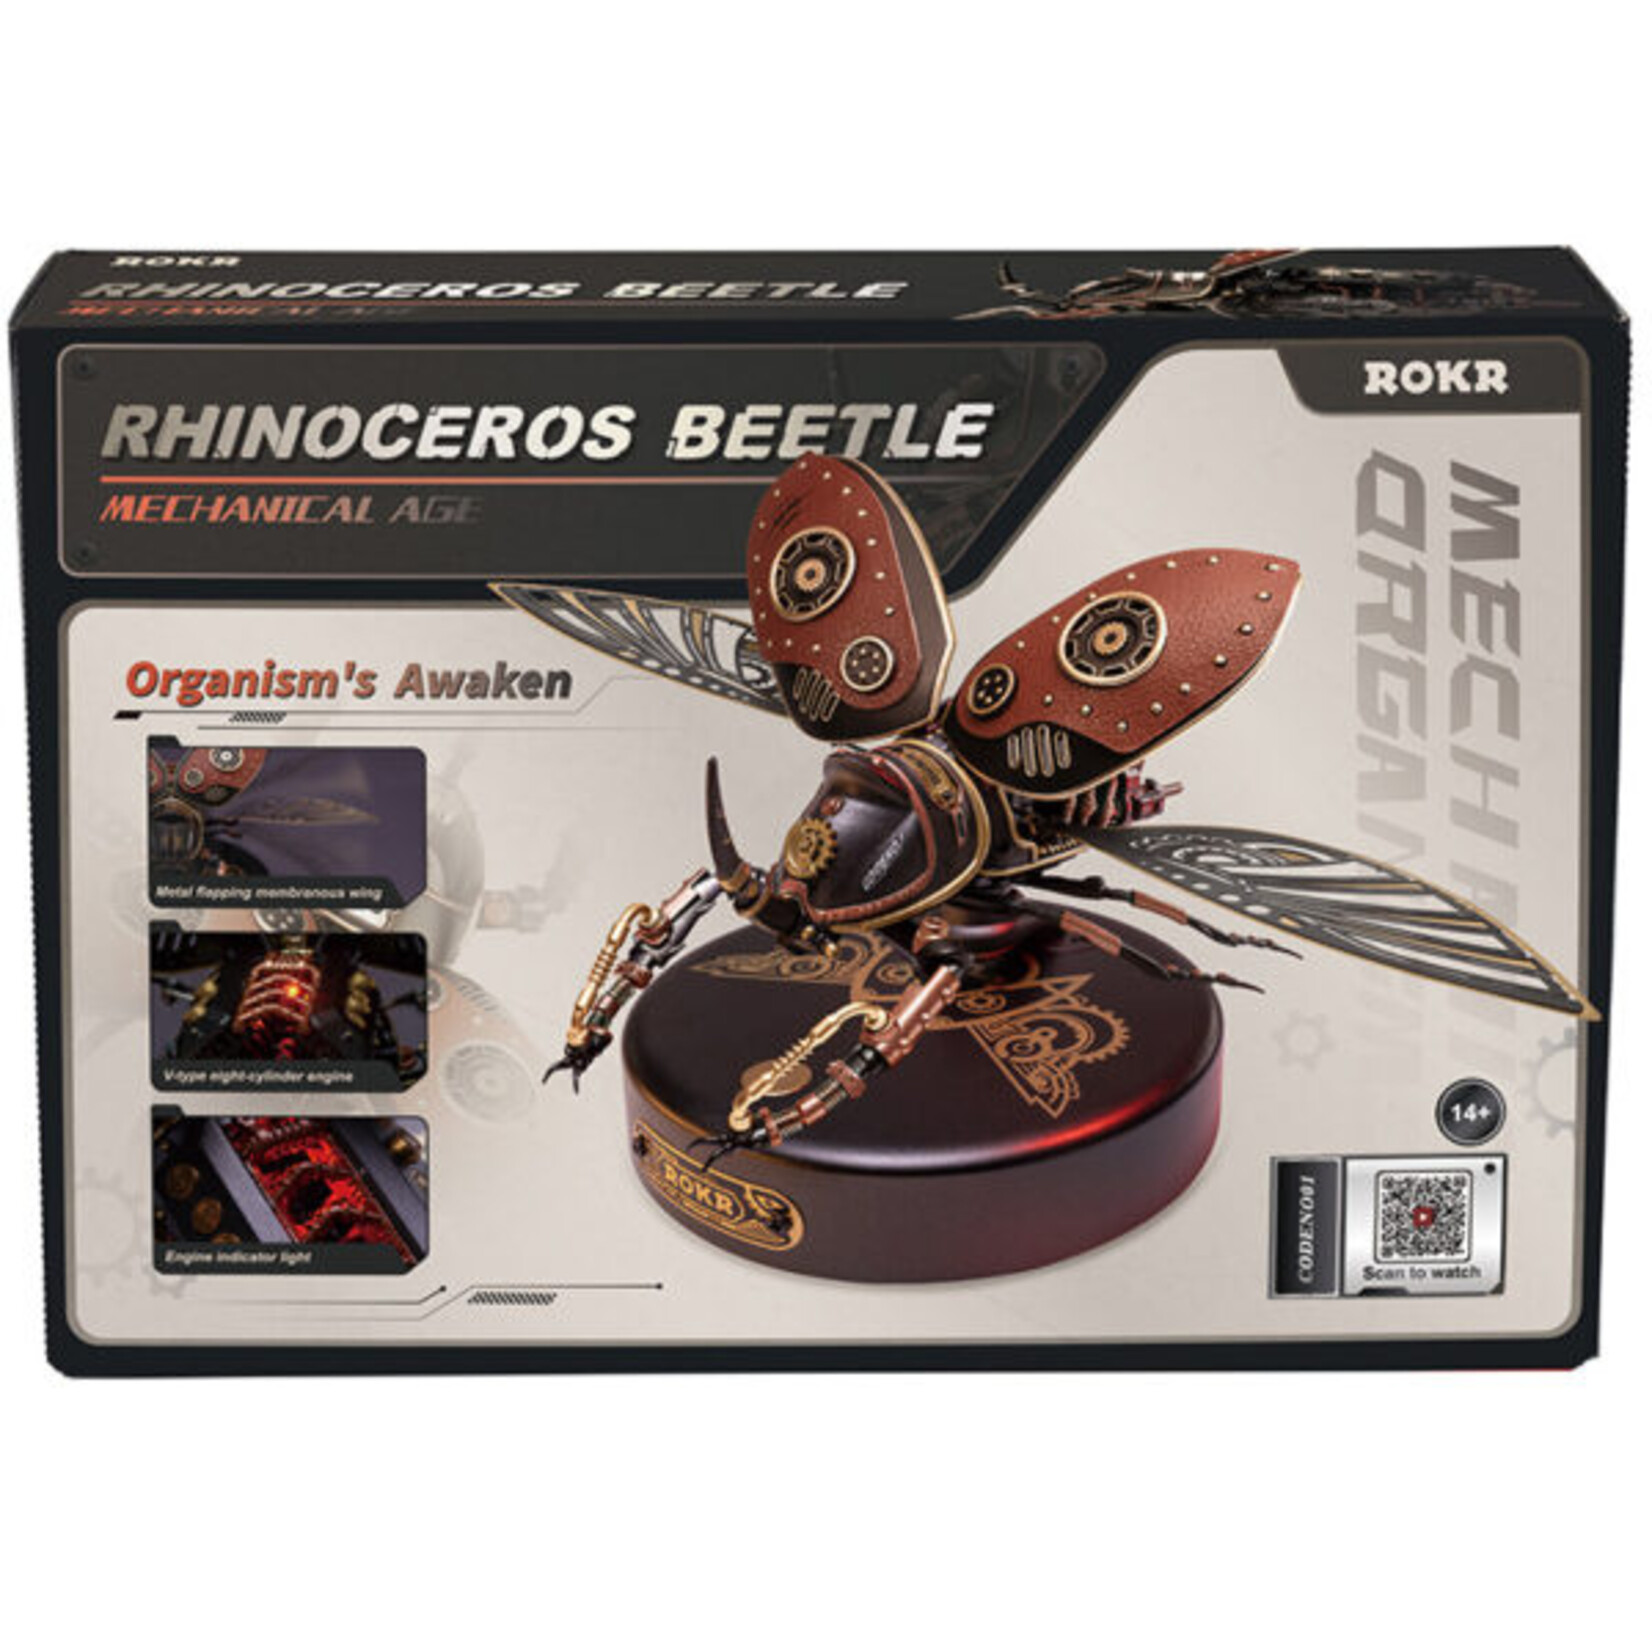 Rhinoceros Beetle Model